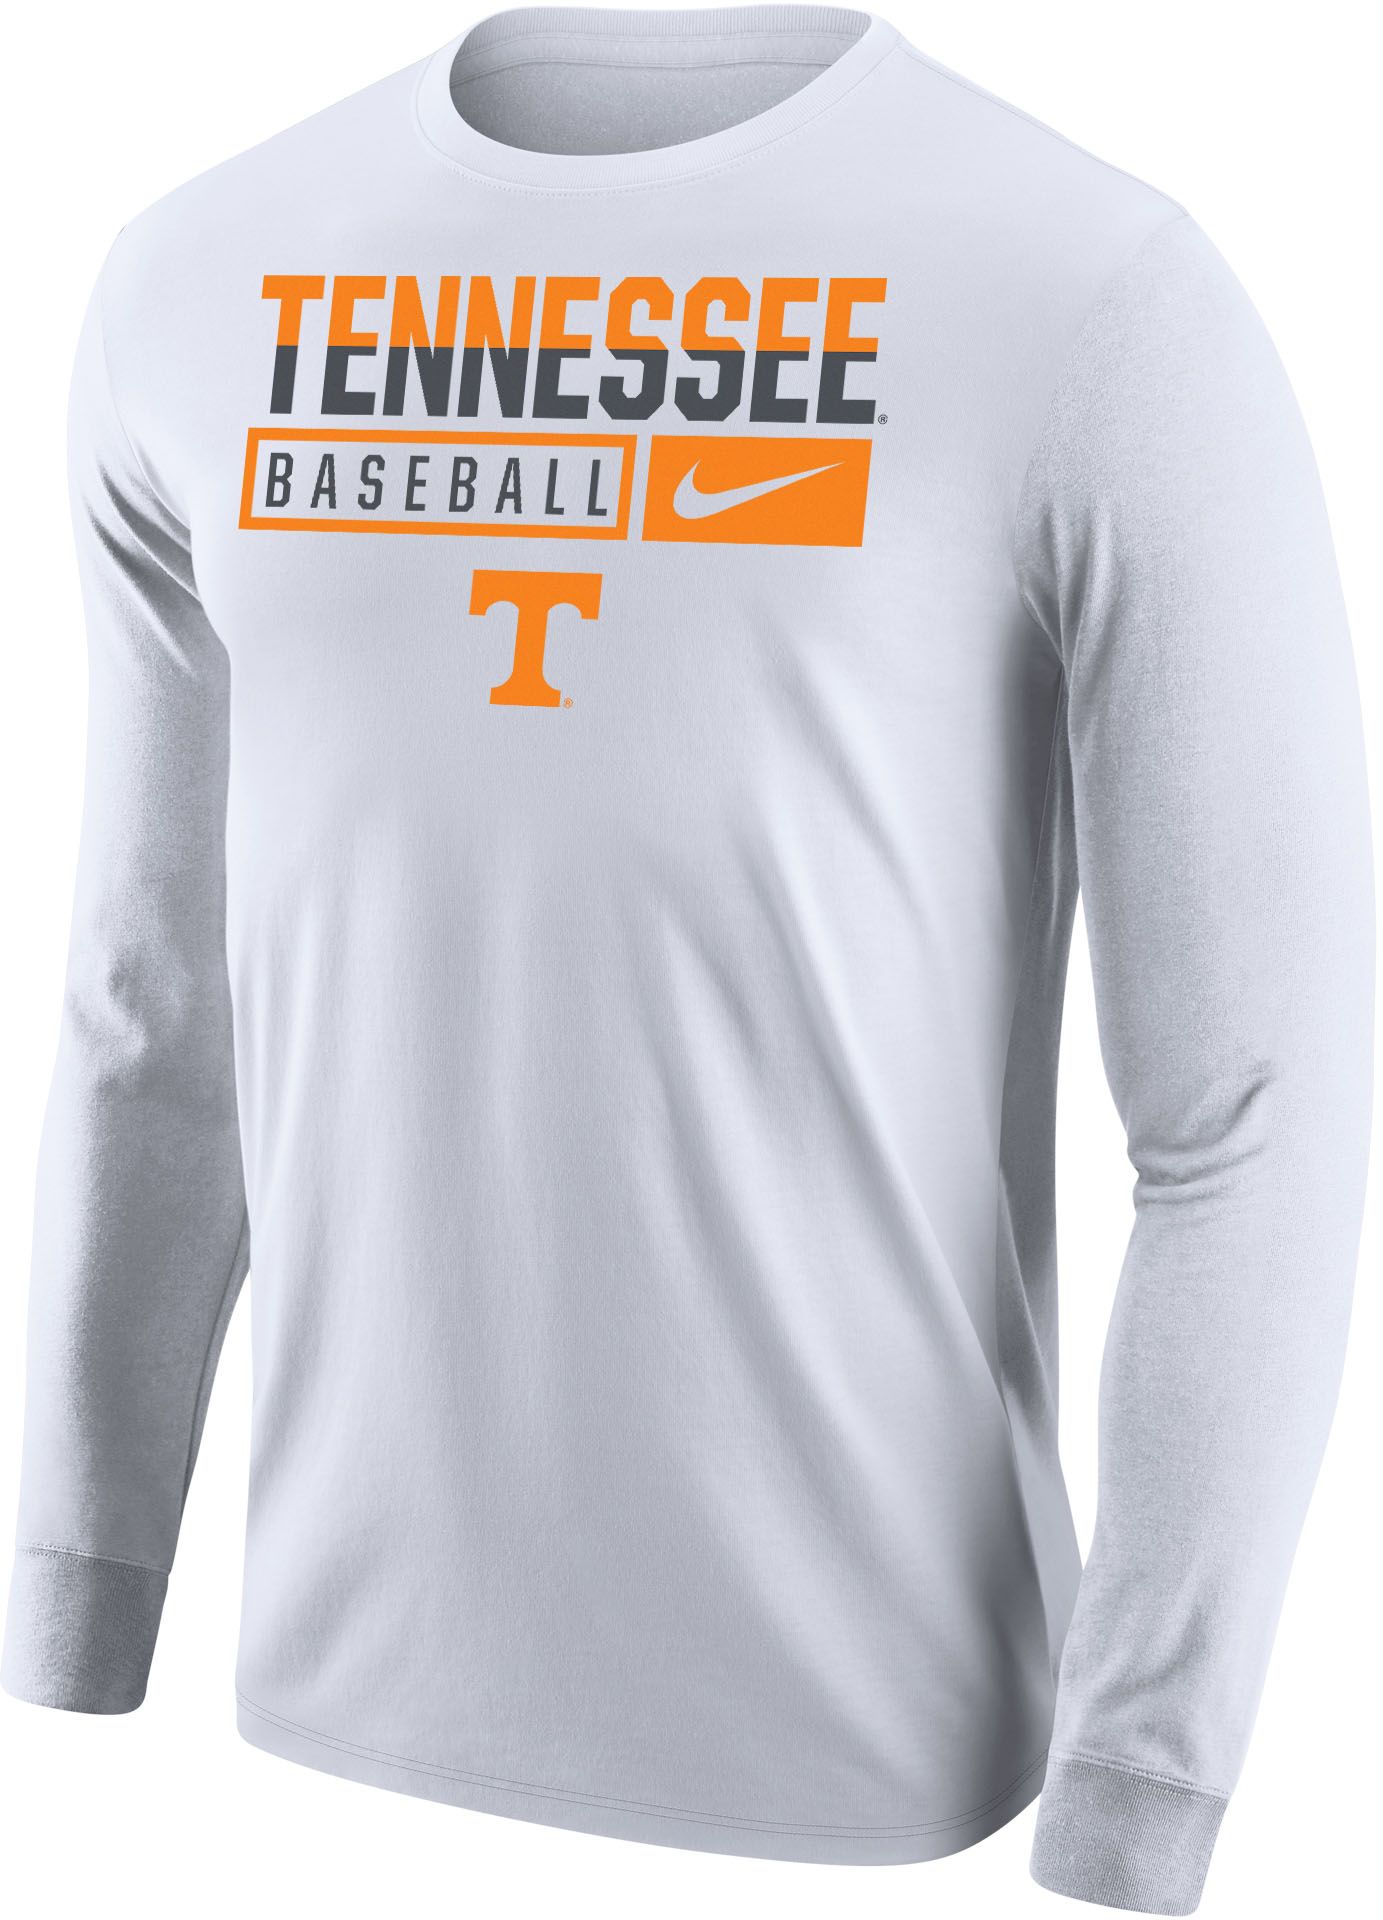 Men's Tennessee Volunteers Baseball Core Cotton Long Sleeve White T-Shirt